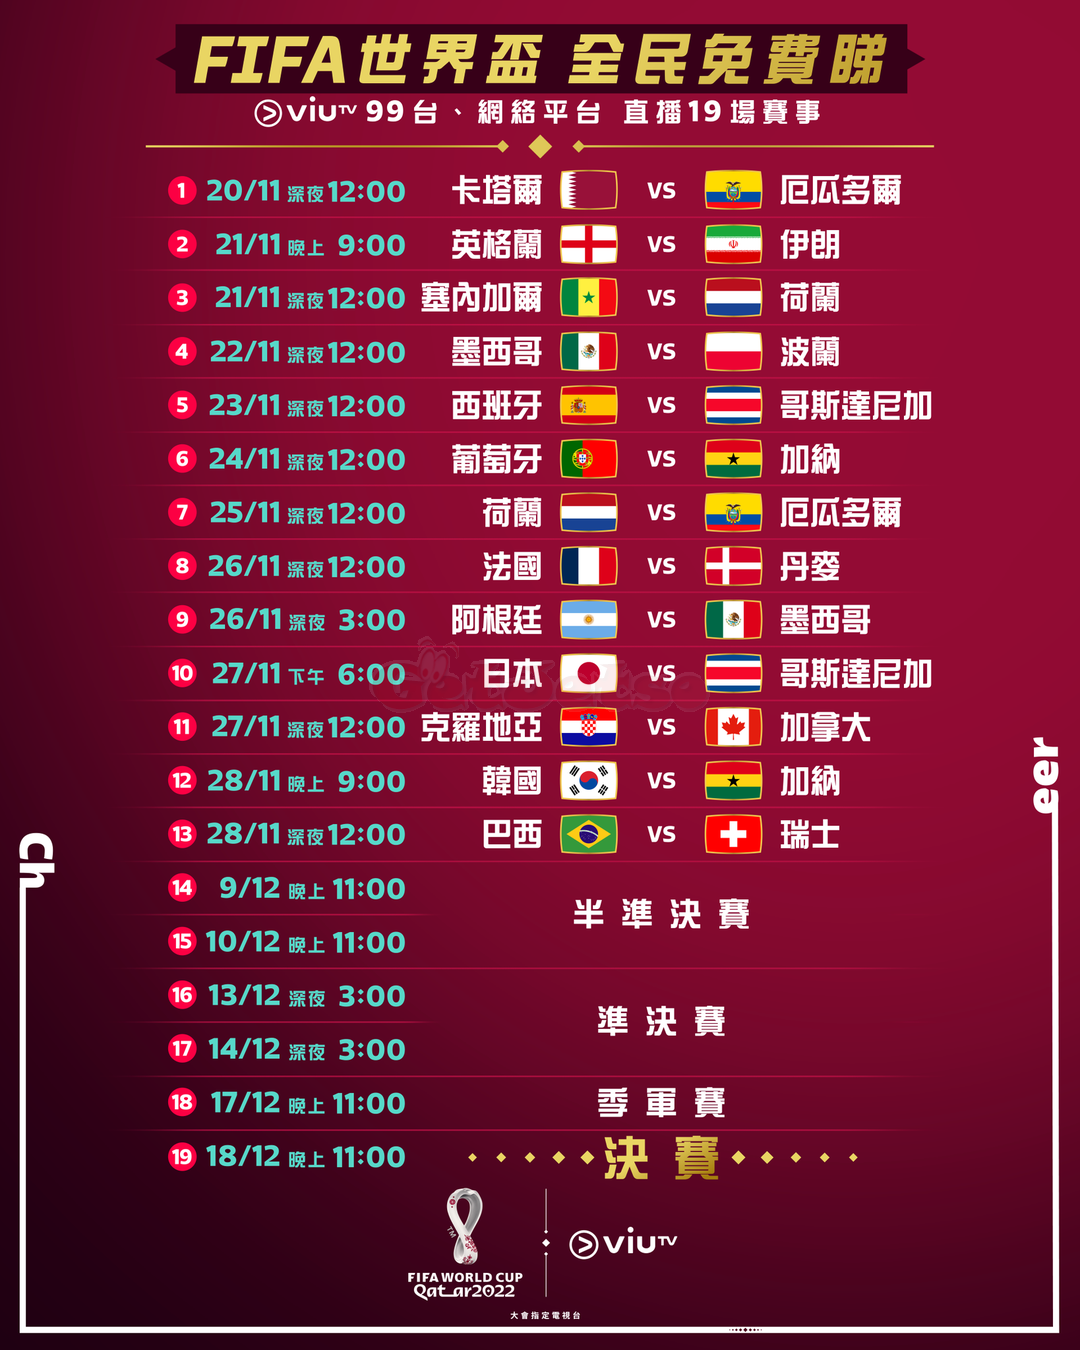 ViuTV 免費直播世界盃19場賽事/香港直播時間表一覽圖片1